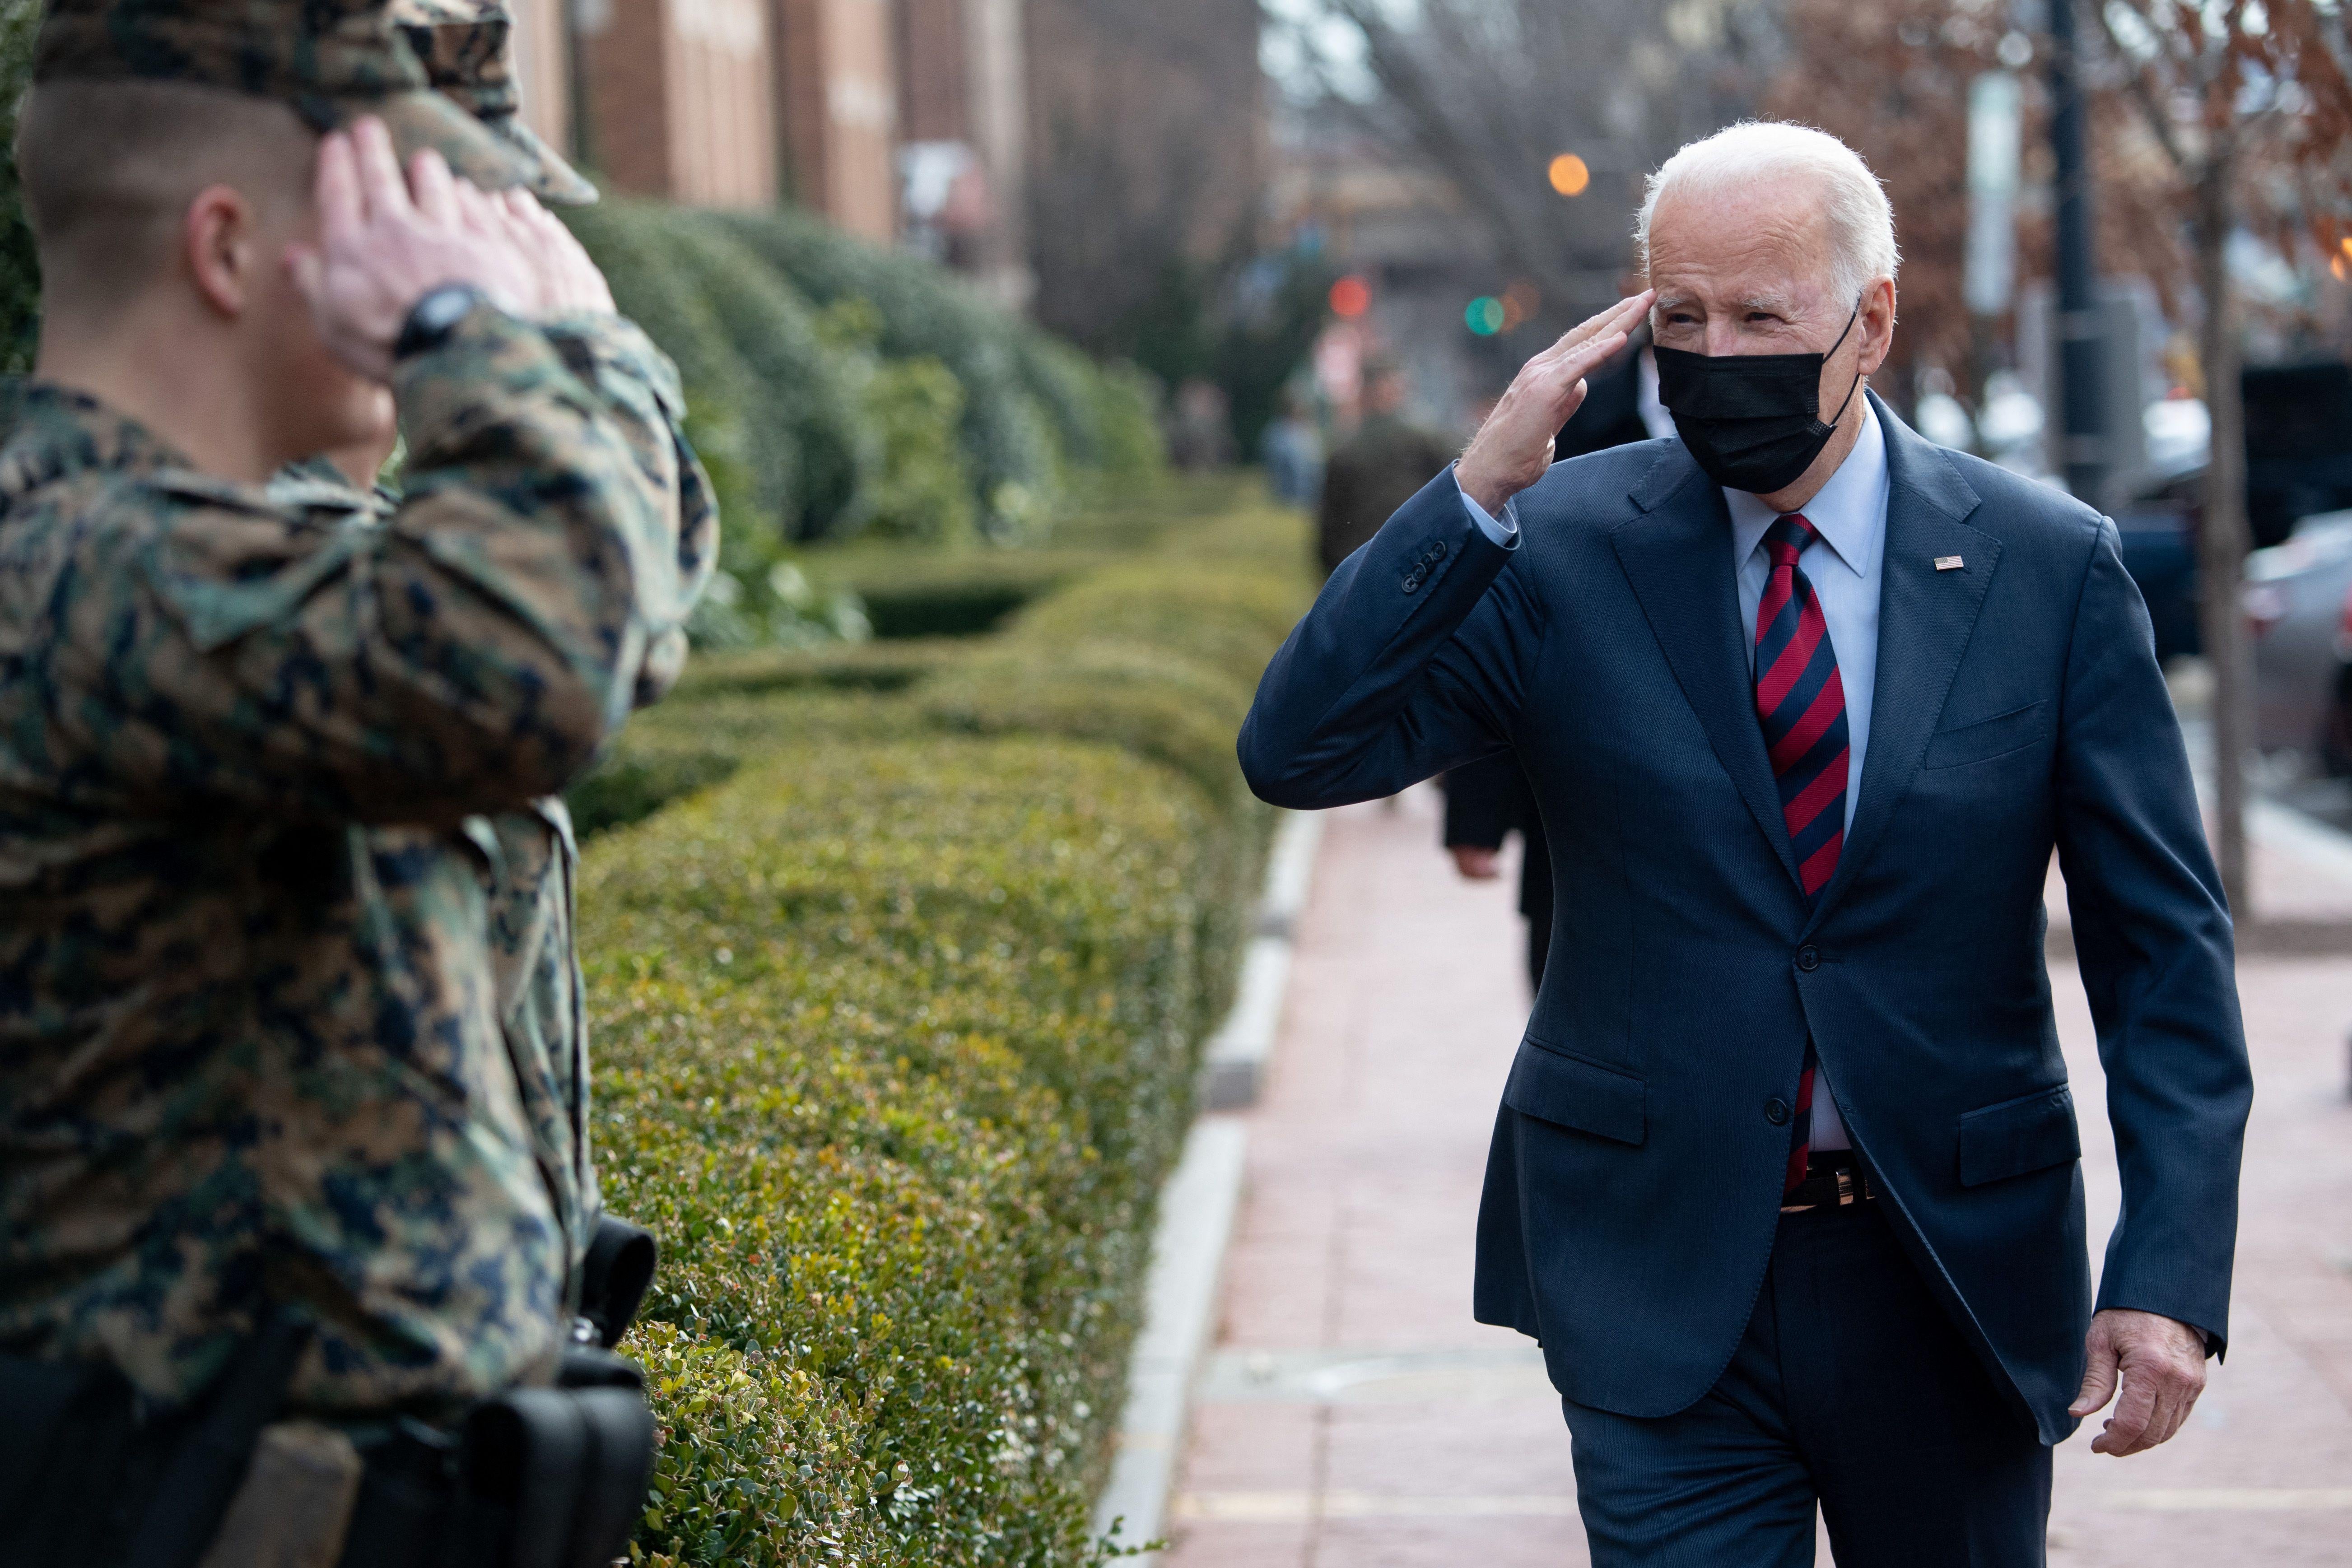 Joe Biden wearing a black mask salutes two Marines on a sidewalk